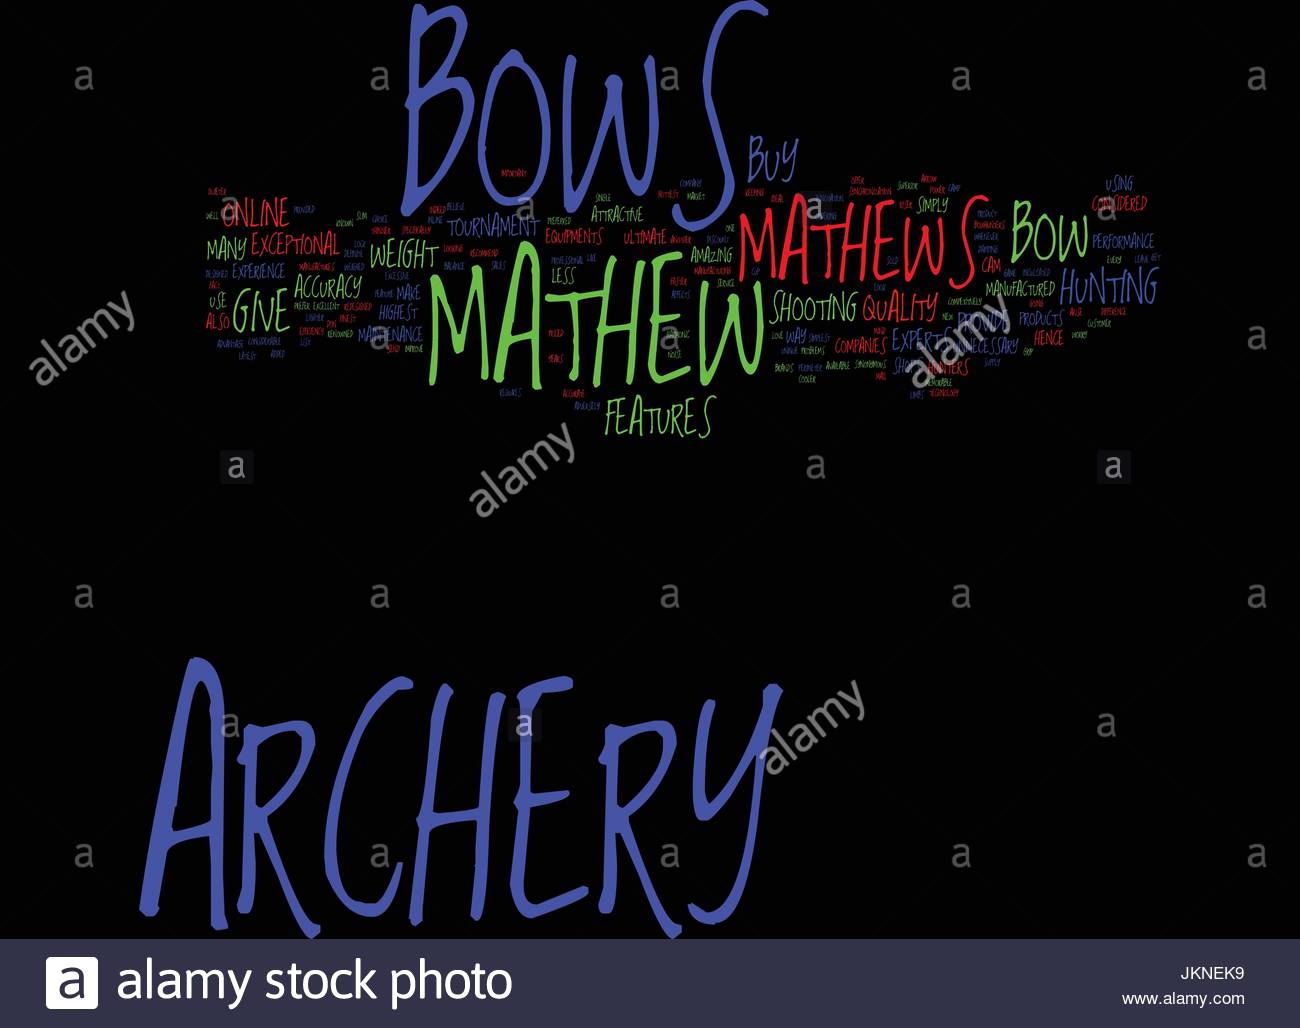 Mathews Archery Text Background Word Cloud Concept Stock Vector